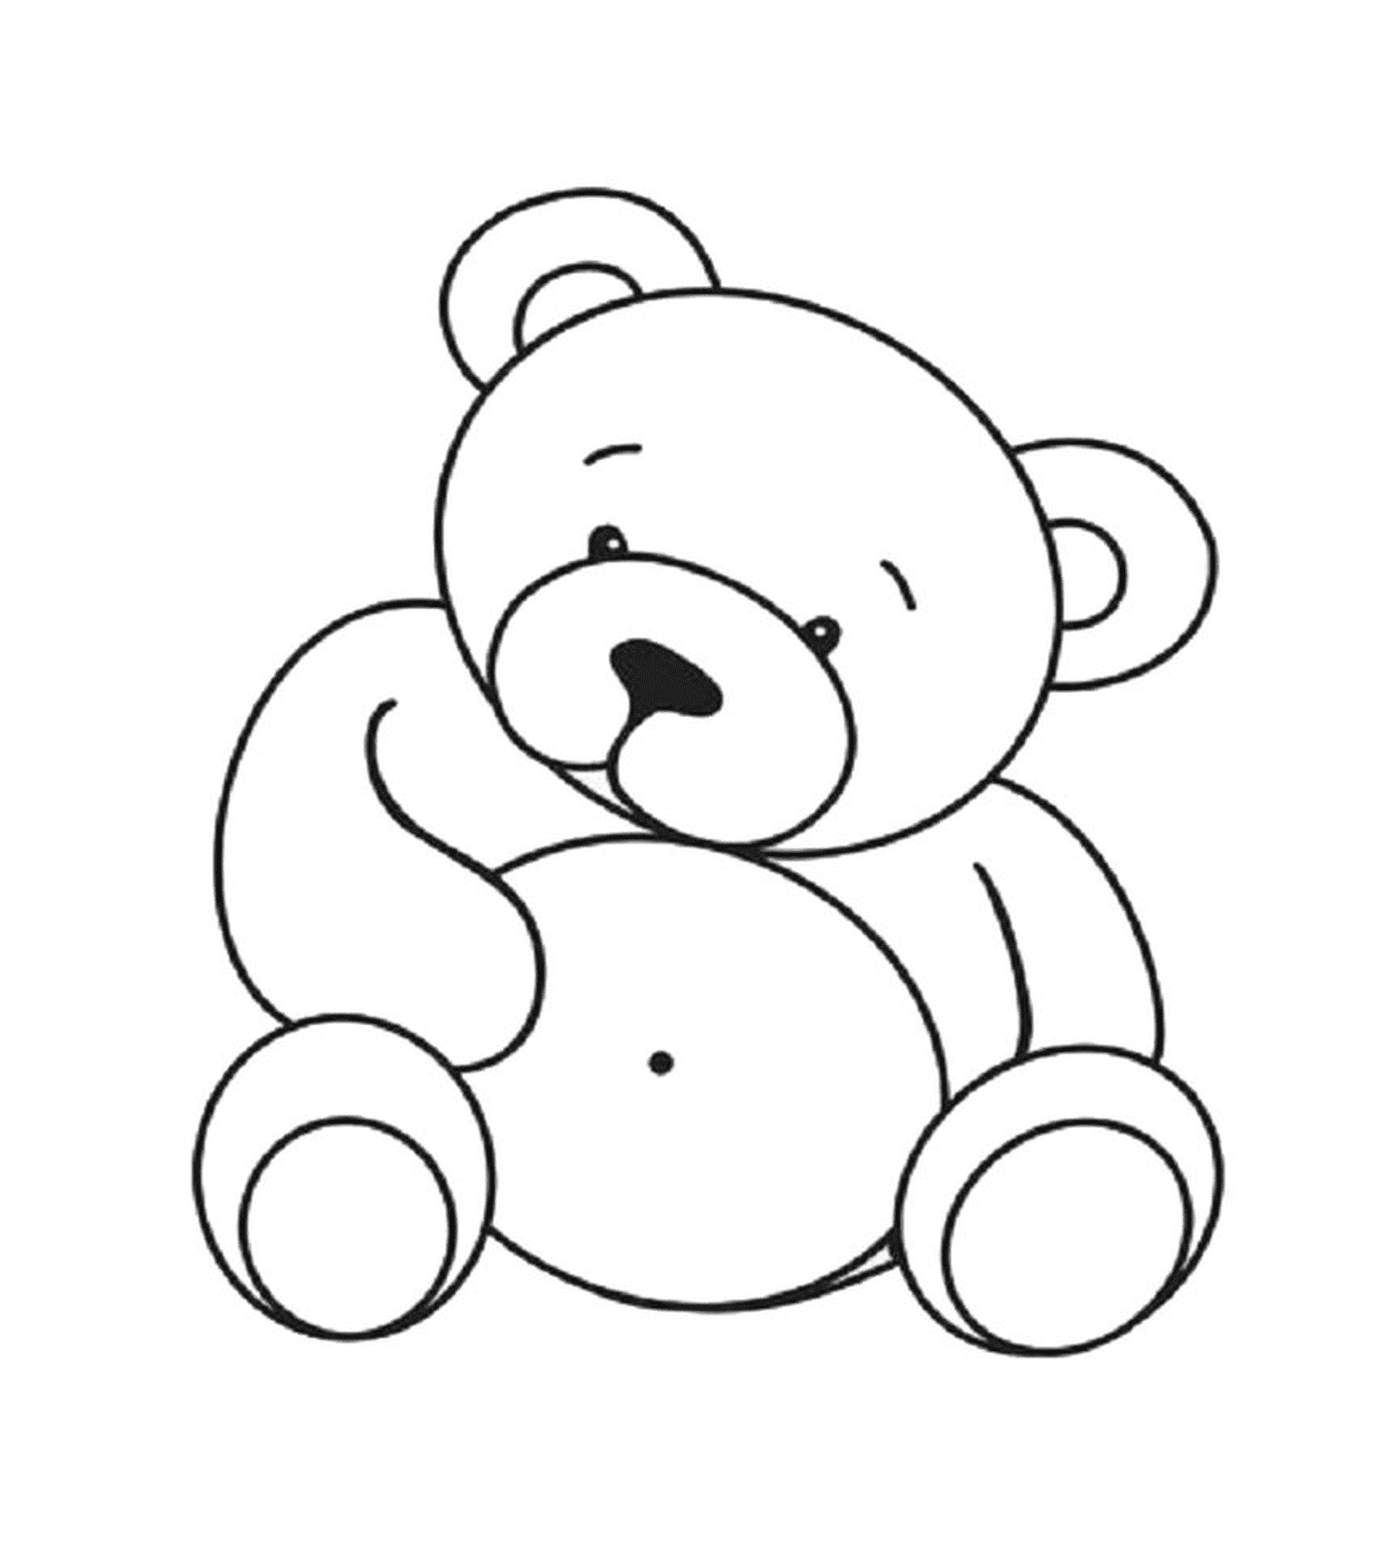  Big teddy bear 